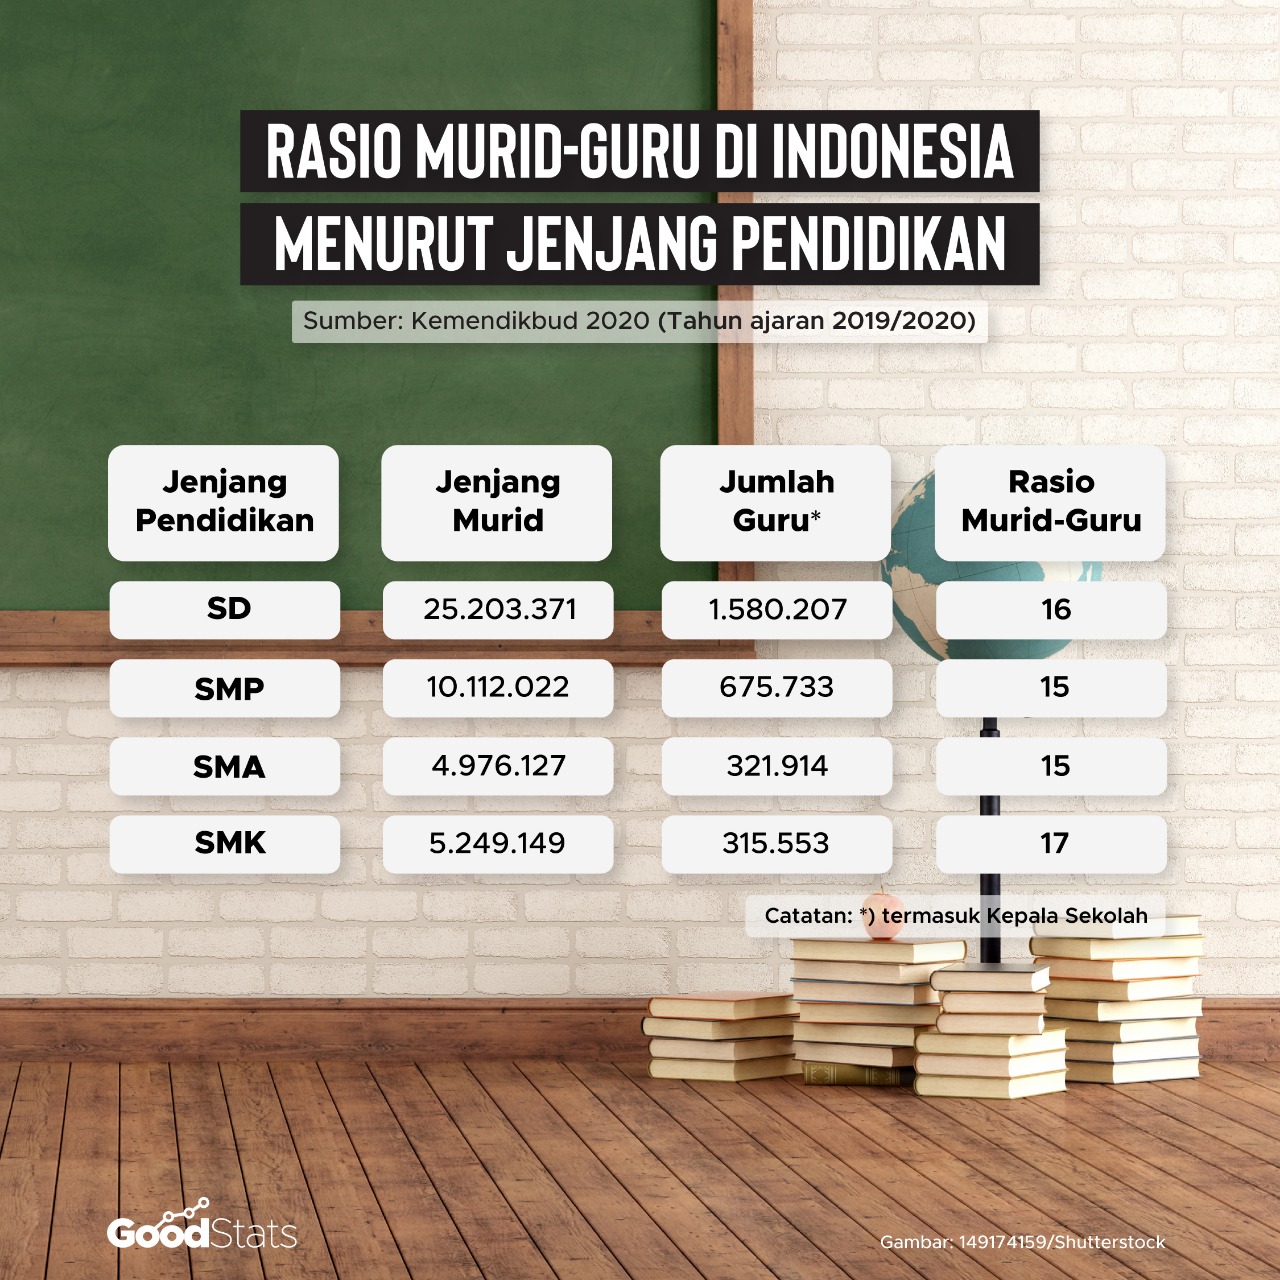 Rasio murid-guru di Indonesia tahun ajaran 2019/2020